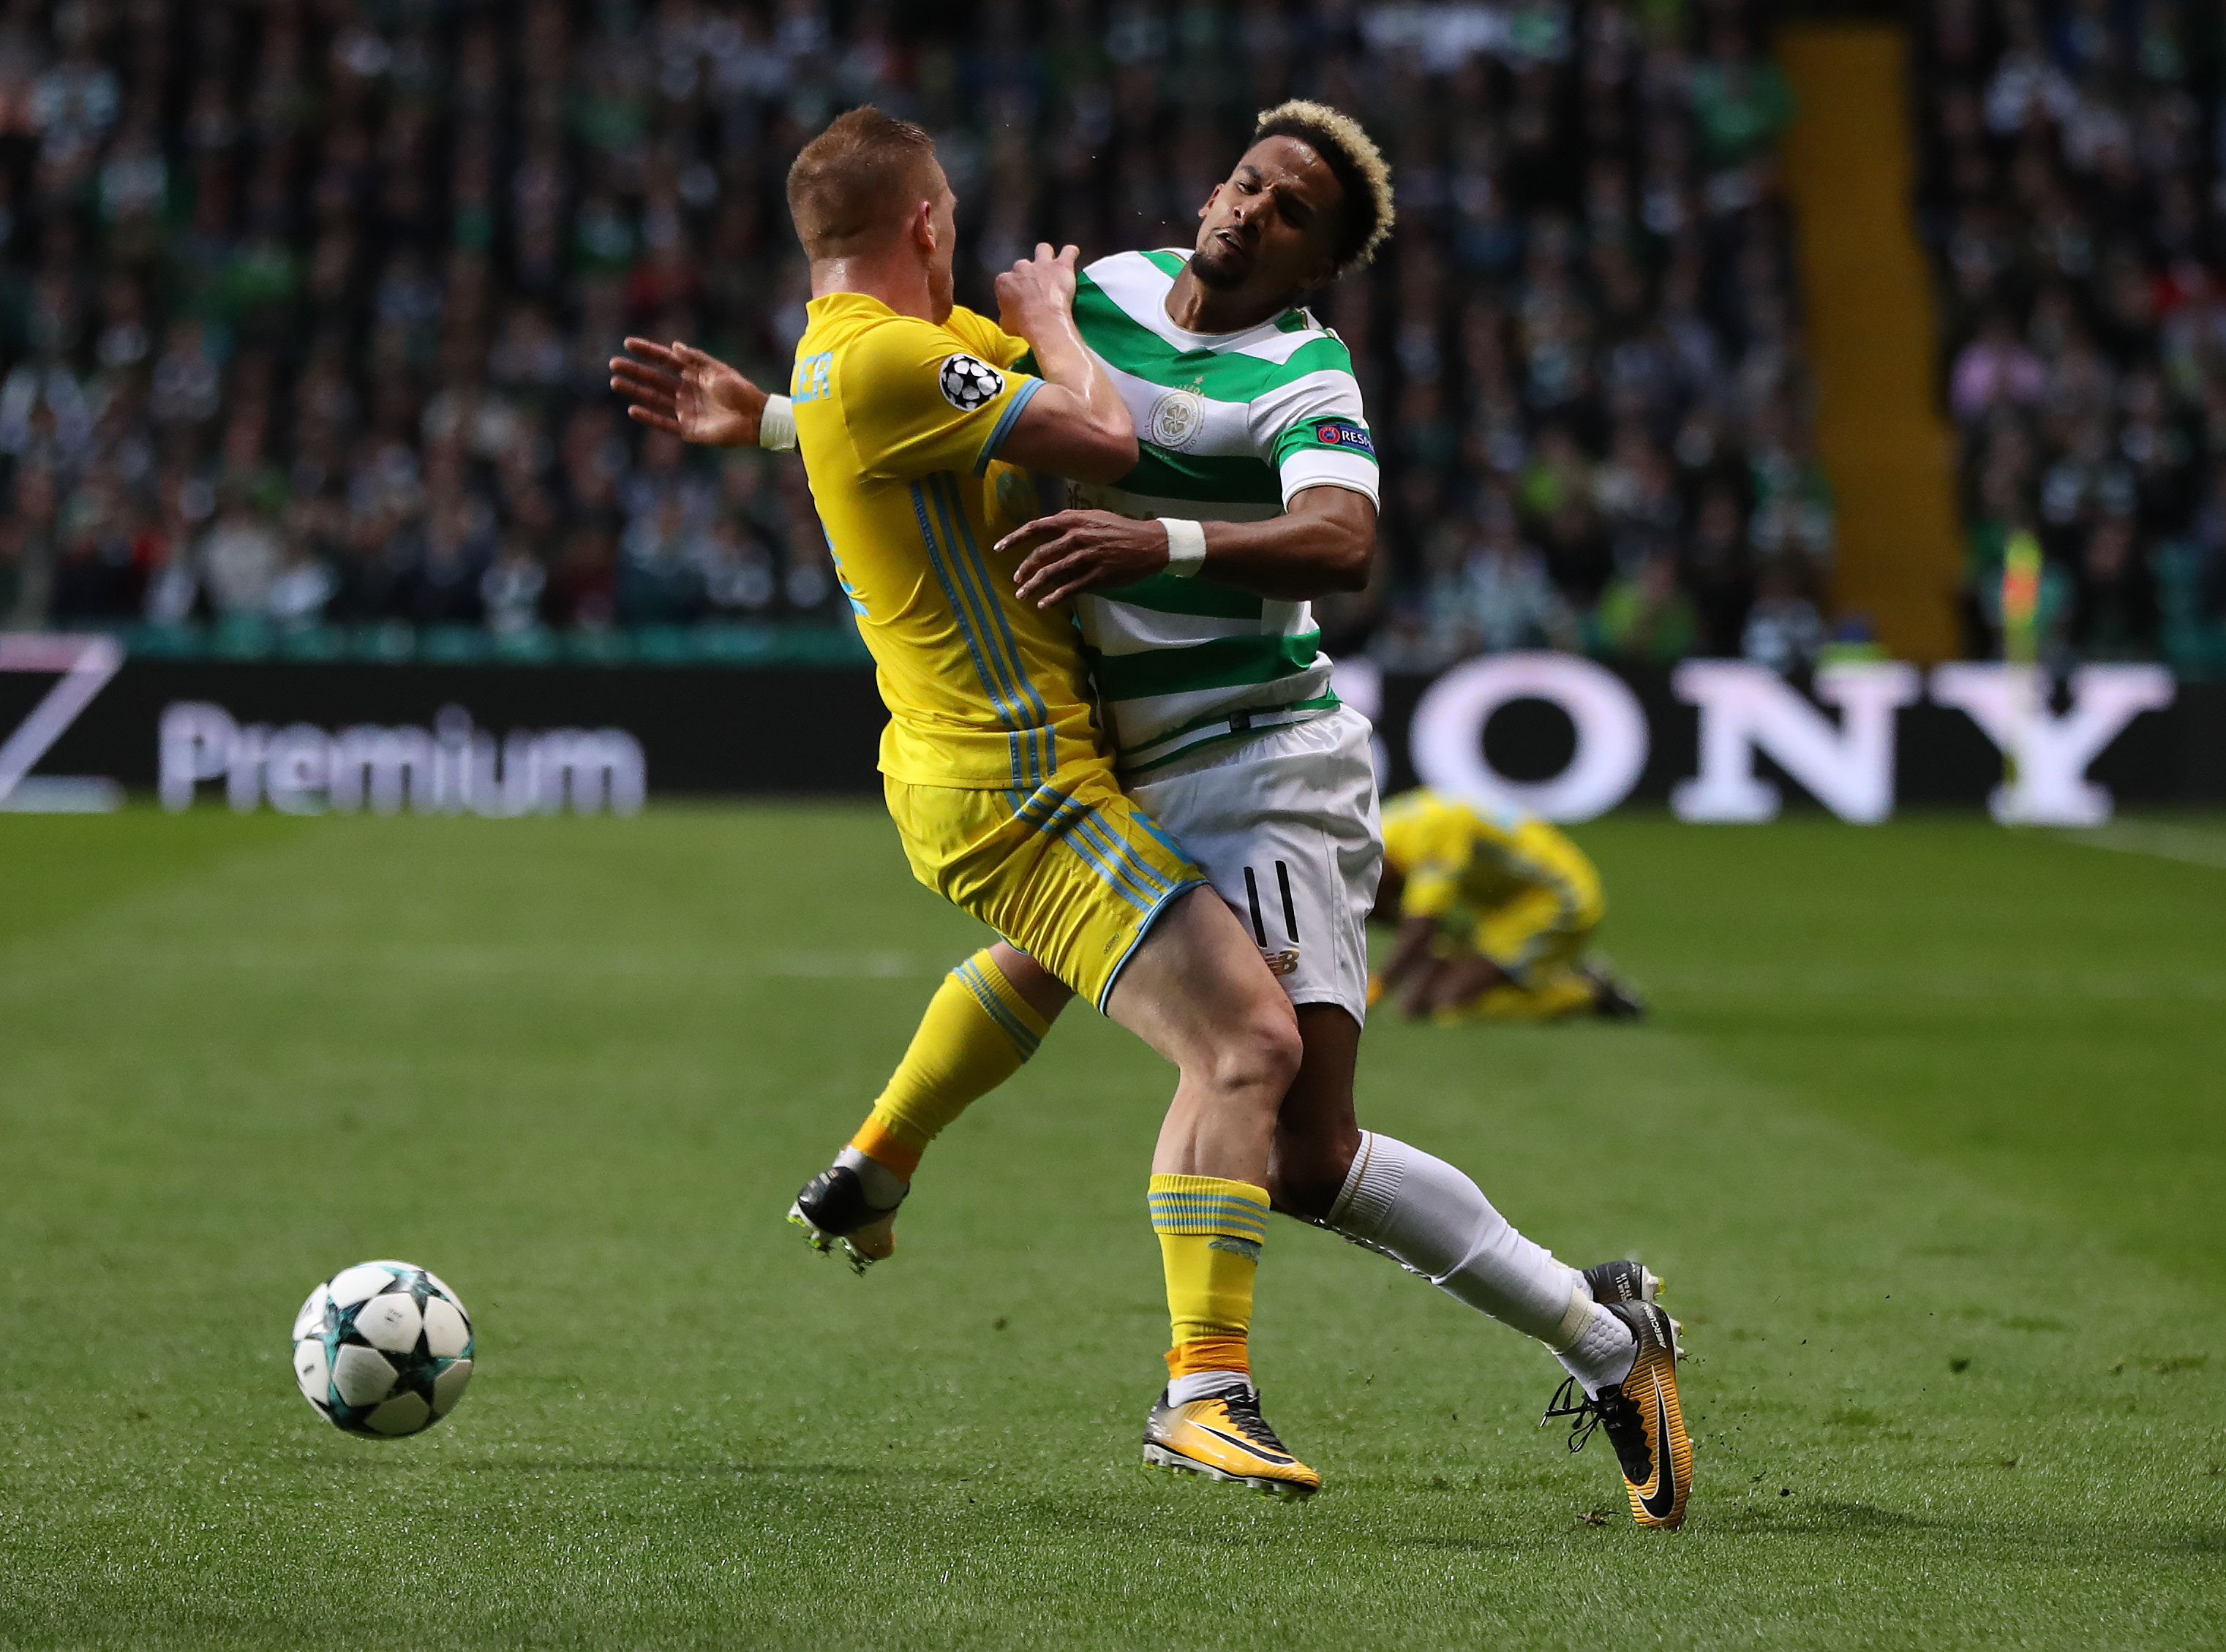 Celtic FC v FK Astana - UEFA Champions League Qualifying Play-Offs Round: First Leg